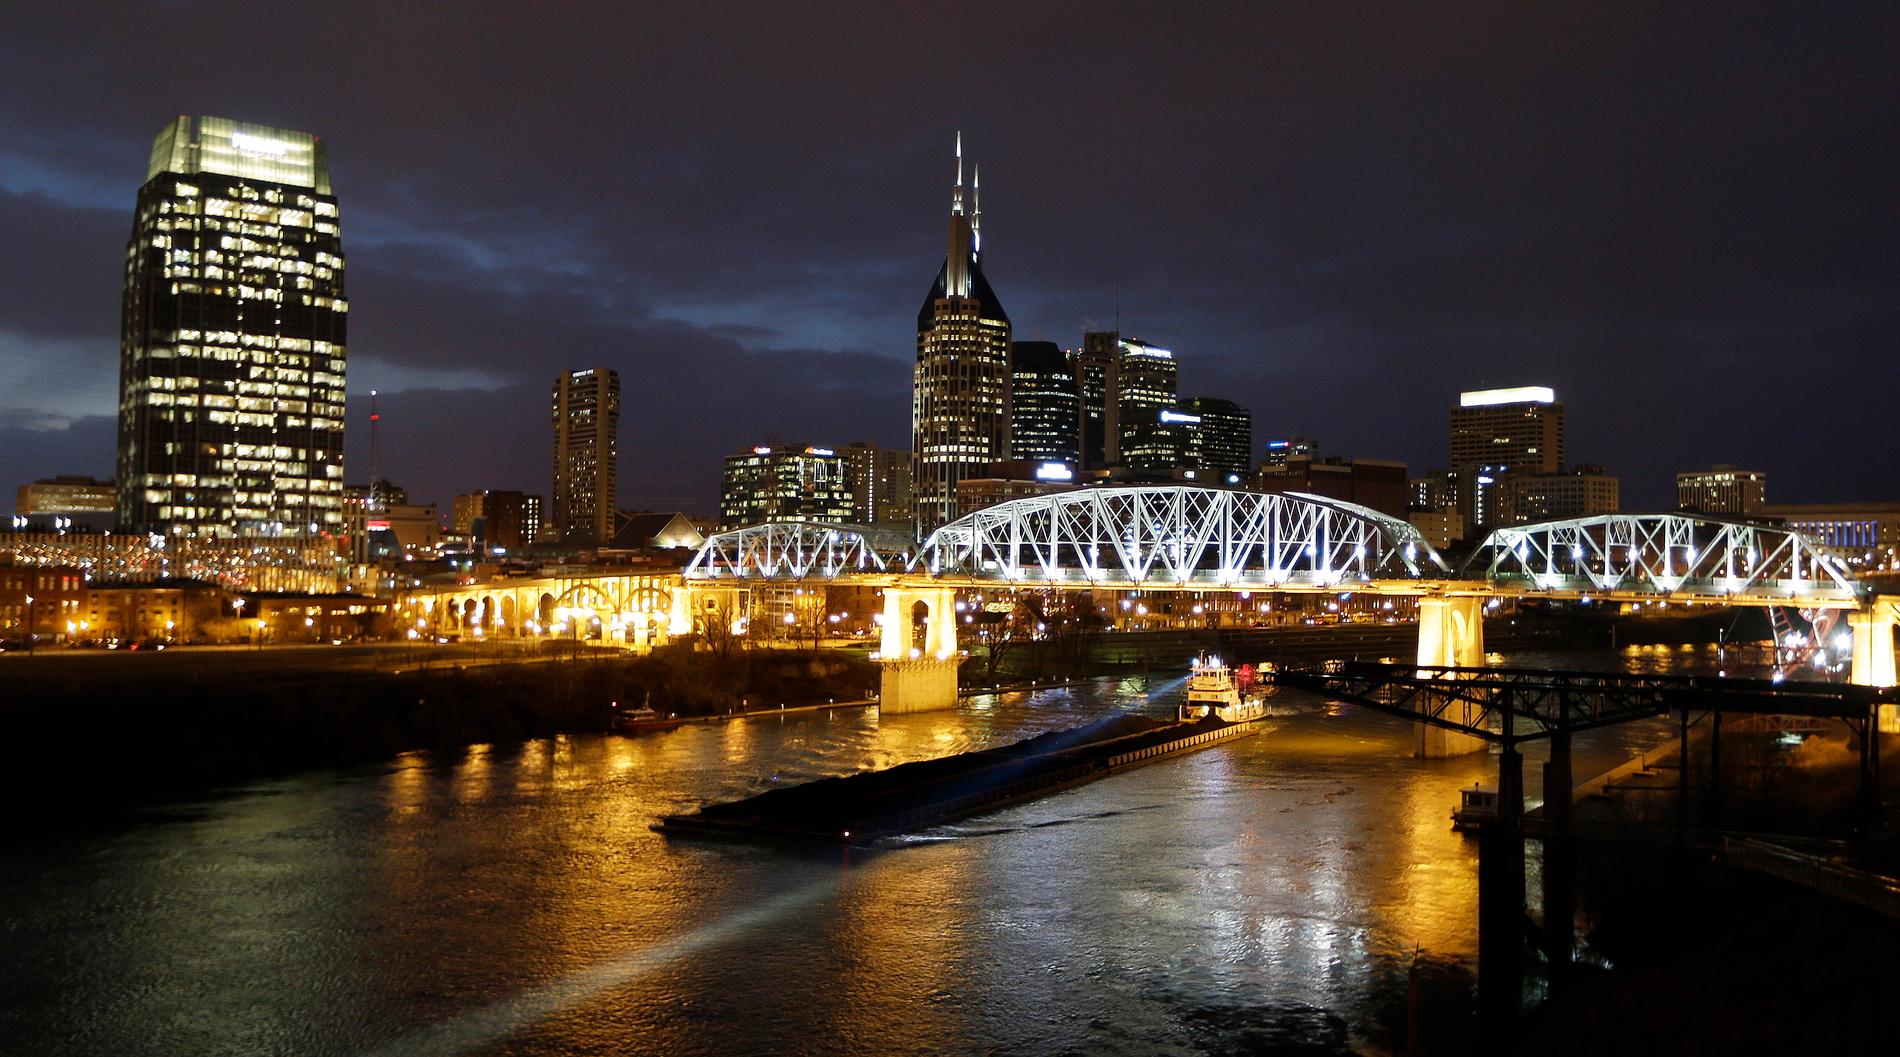 Nashville by night.